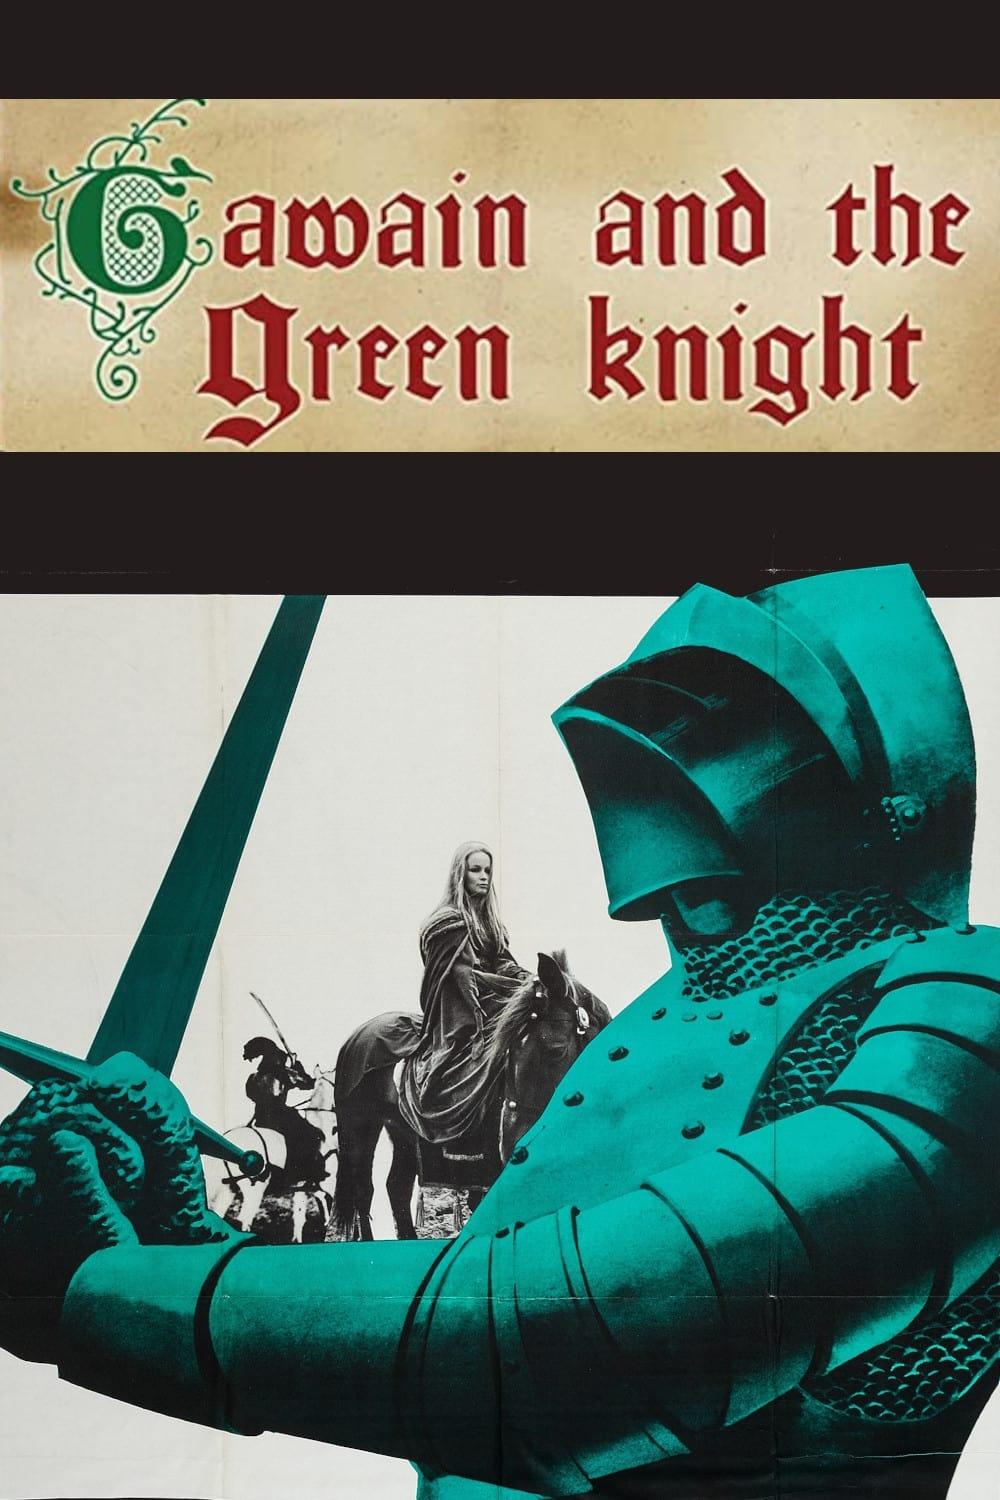 Sir Gawain und der grüne Ritter poster